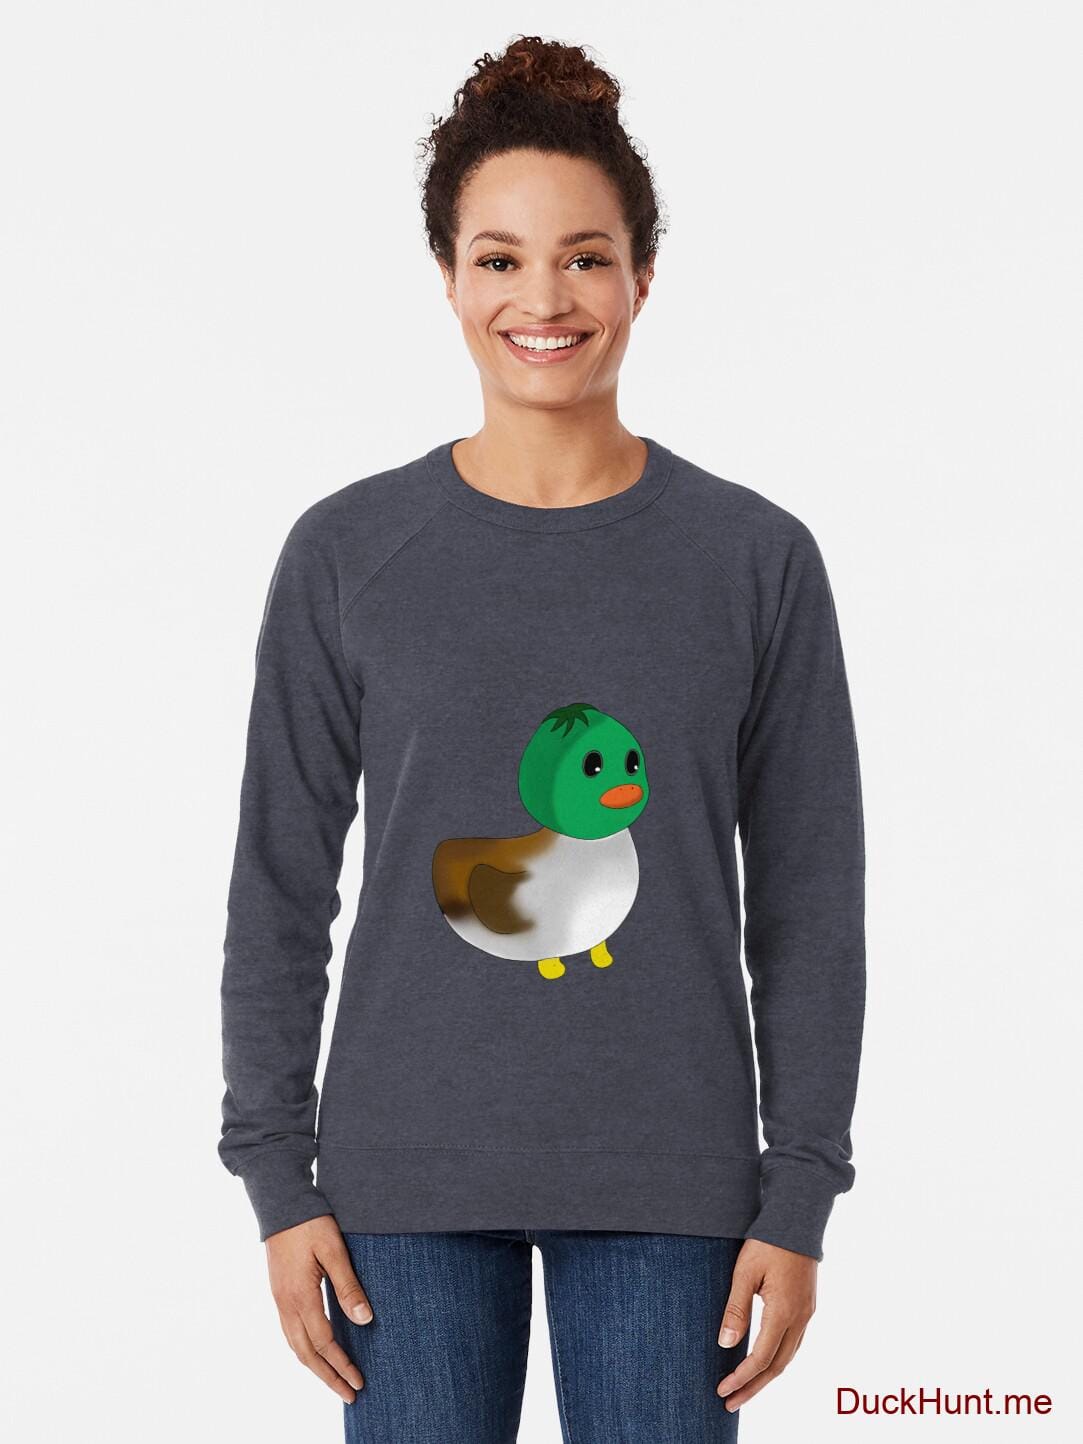 Normal Duck Denim Lightweight Sweatshirt alternative image 1